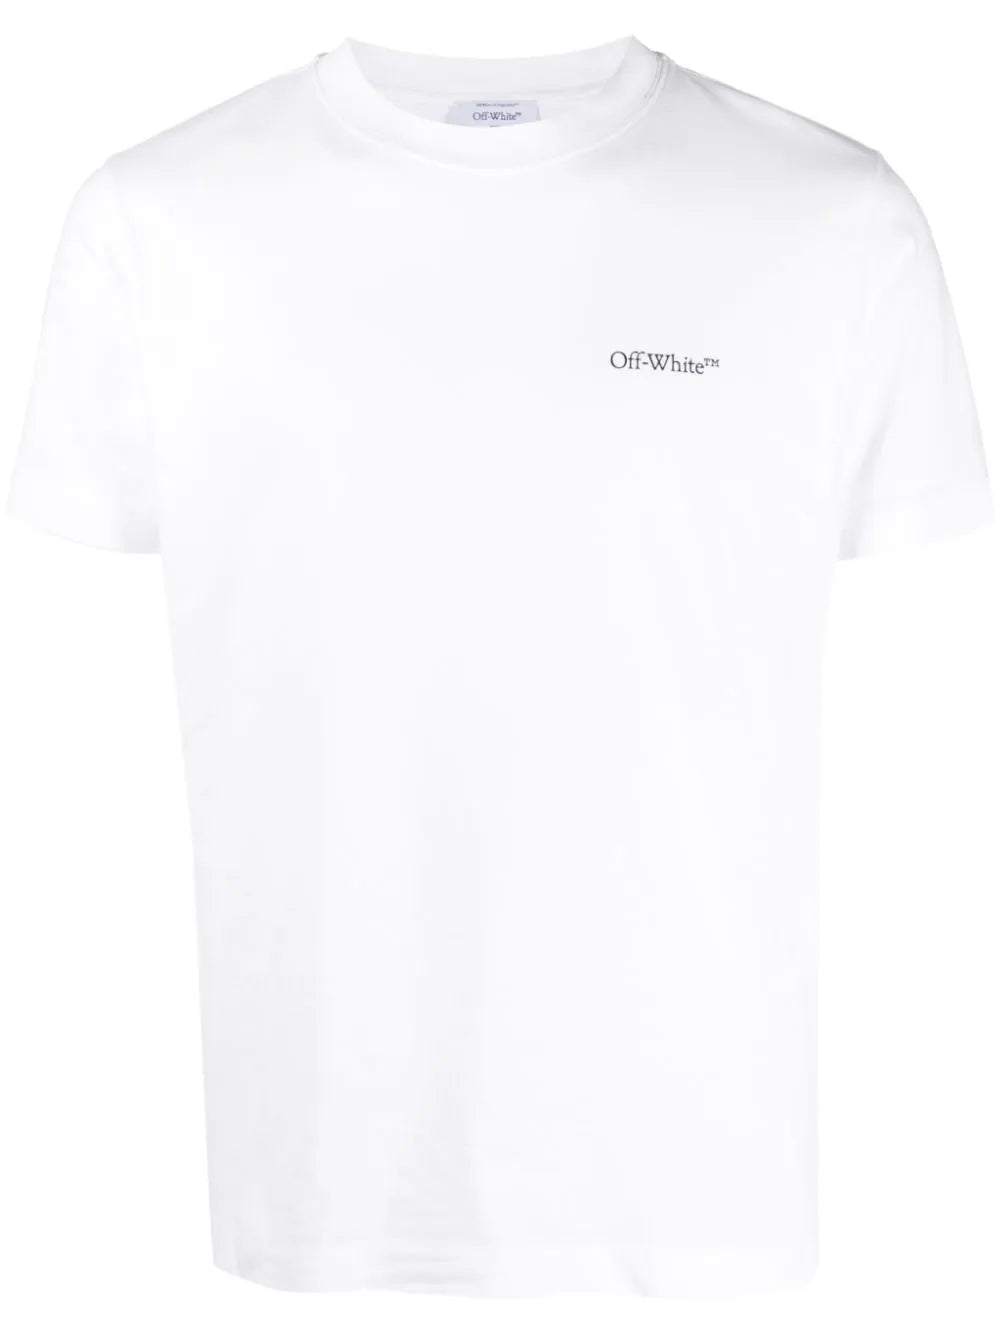 Off-White Scratch Arrow Logo Print T-Shirt in White